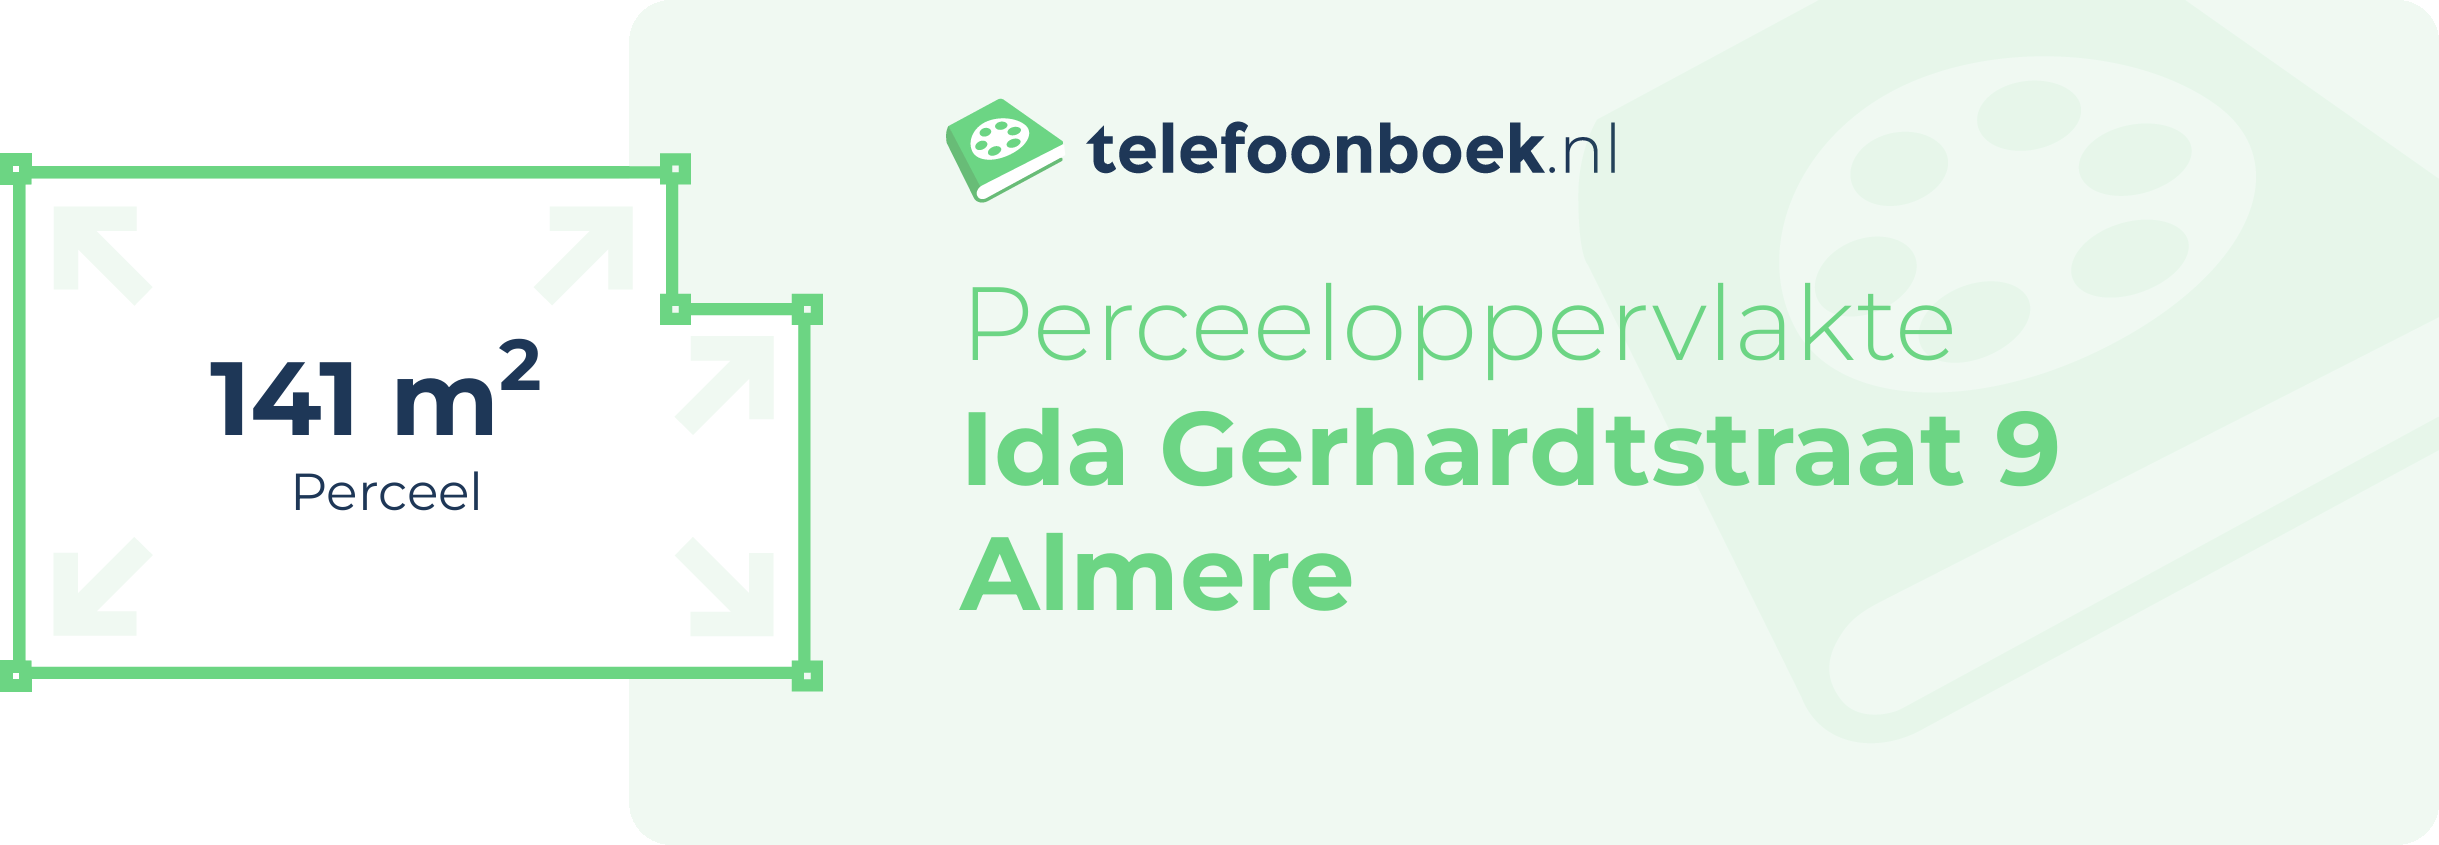 Perceeloppervlakte Ida Gerhardtstraat 9 Almere